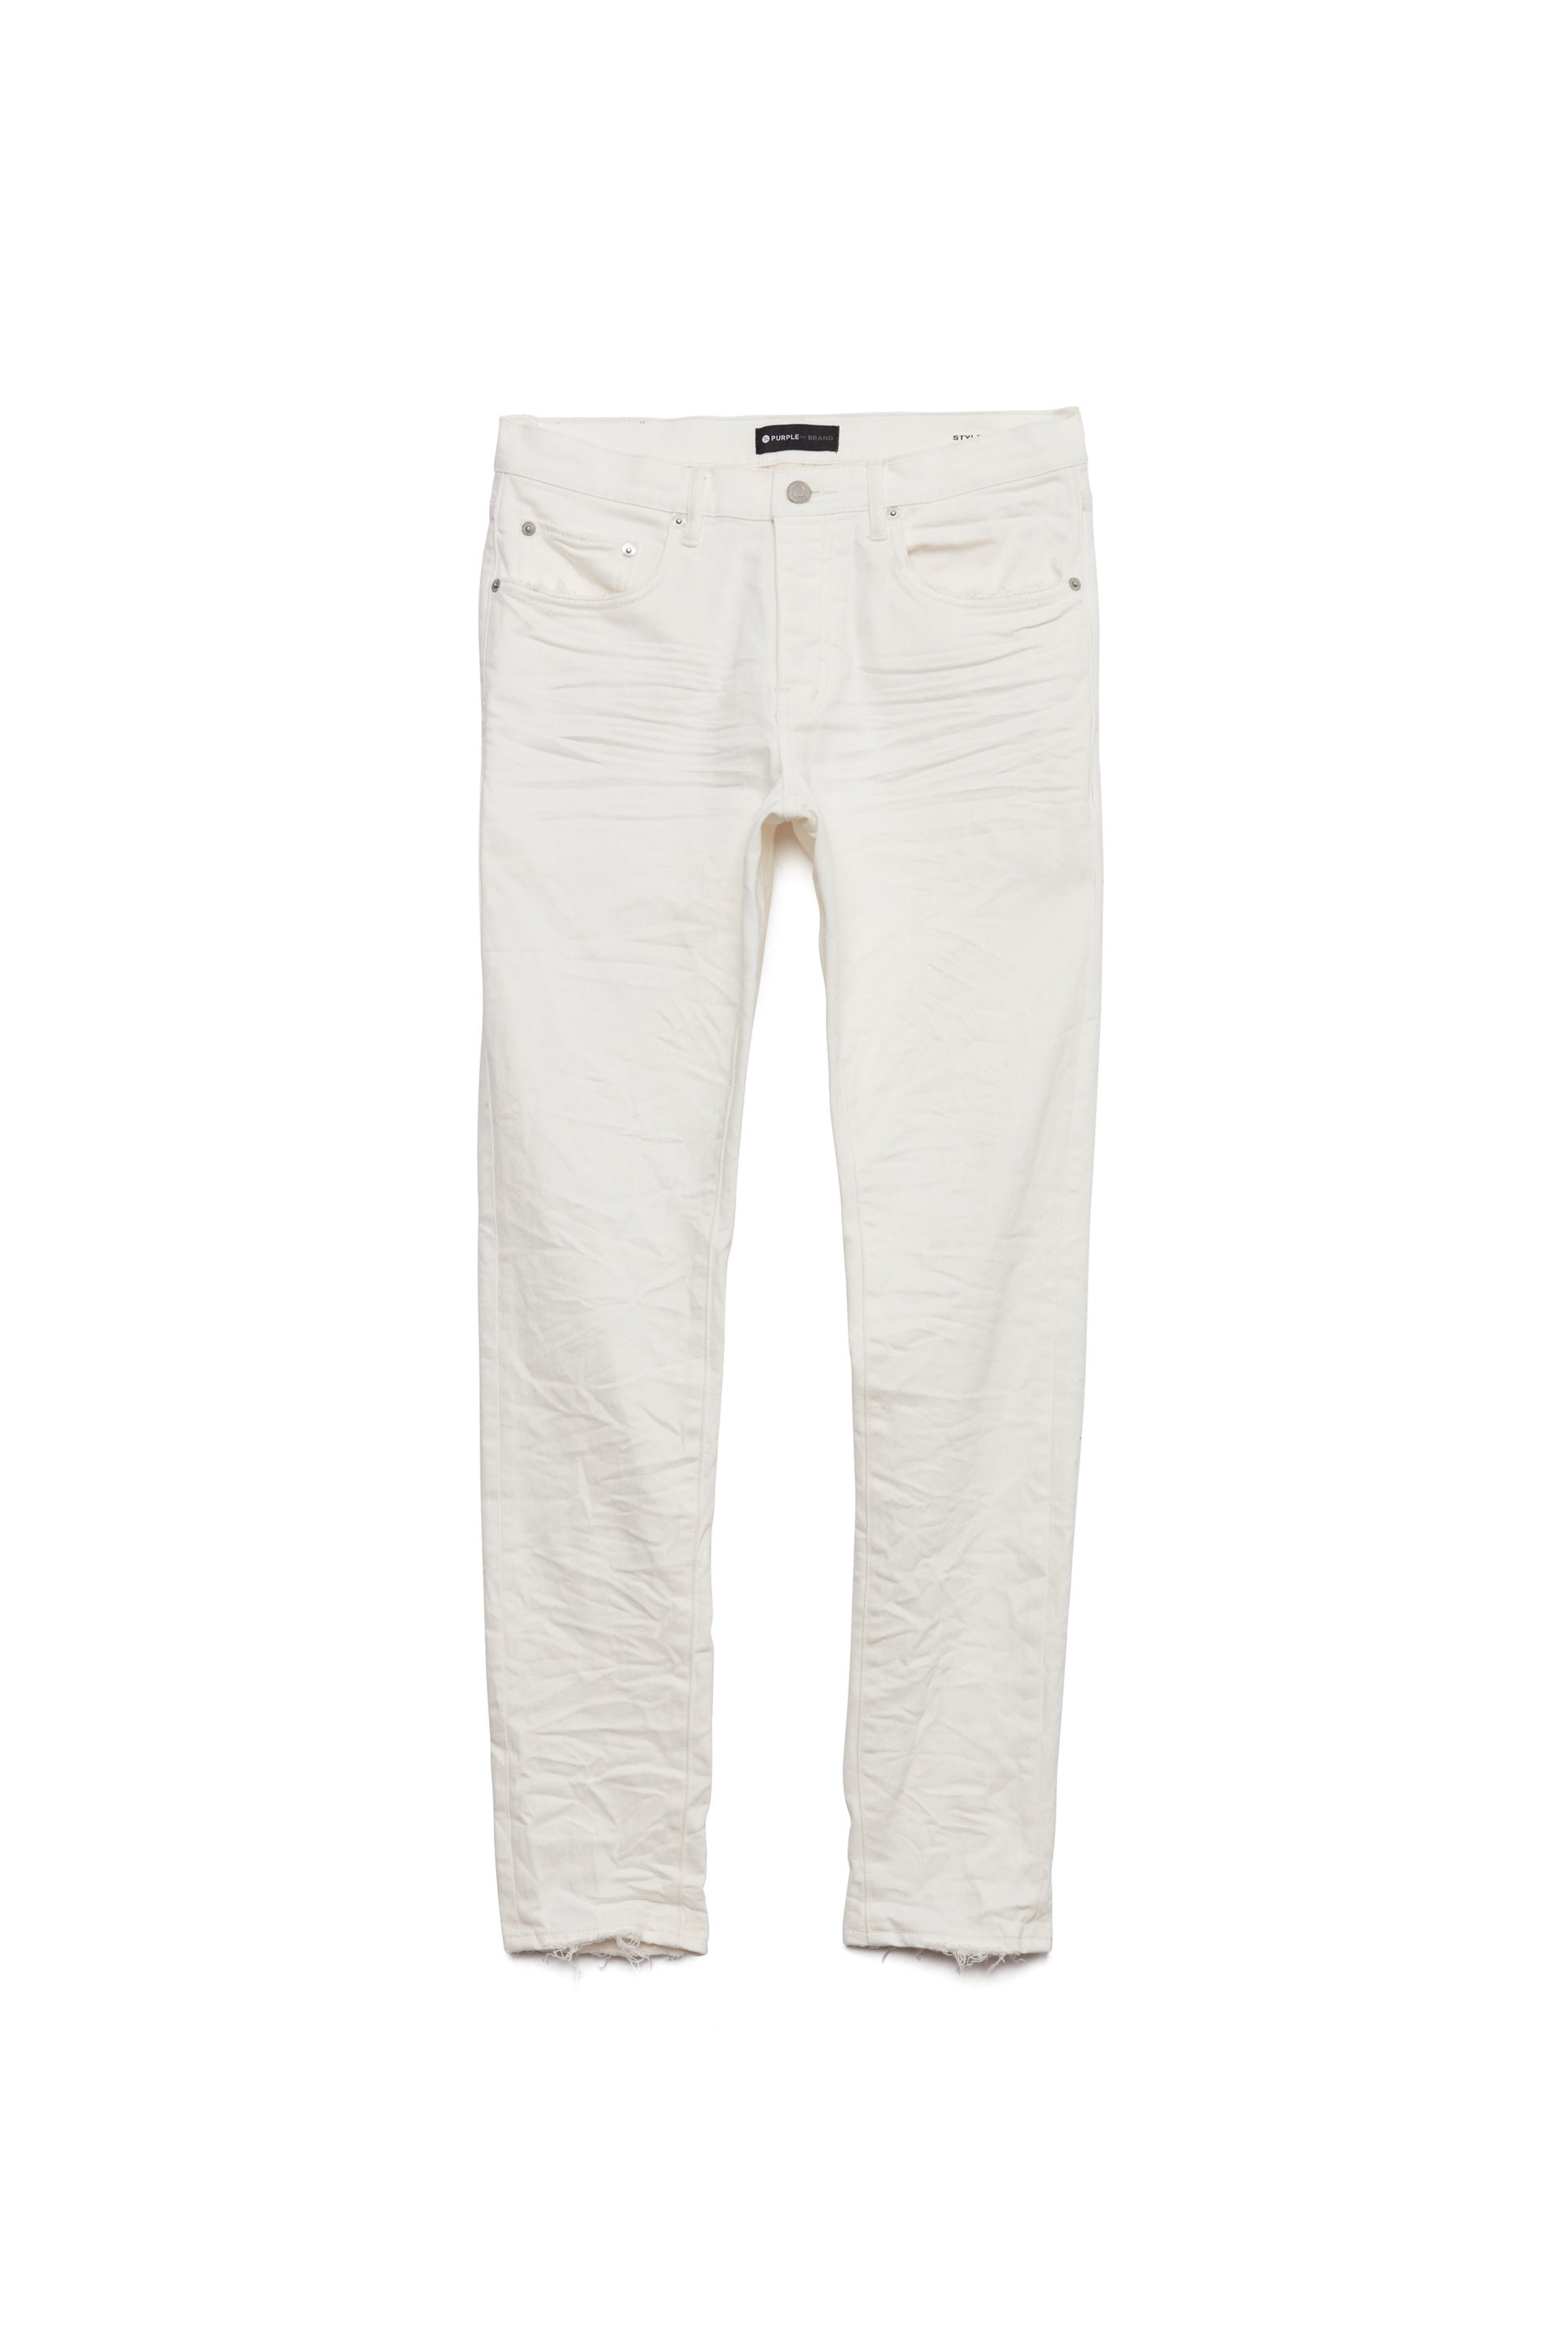 Purple Brand Skinny Jeans - White, 10.75 Rise Jeans, Clothing - WPBUR21298